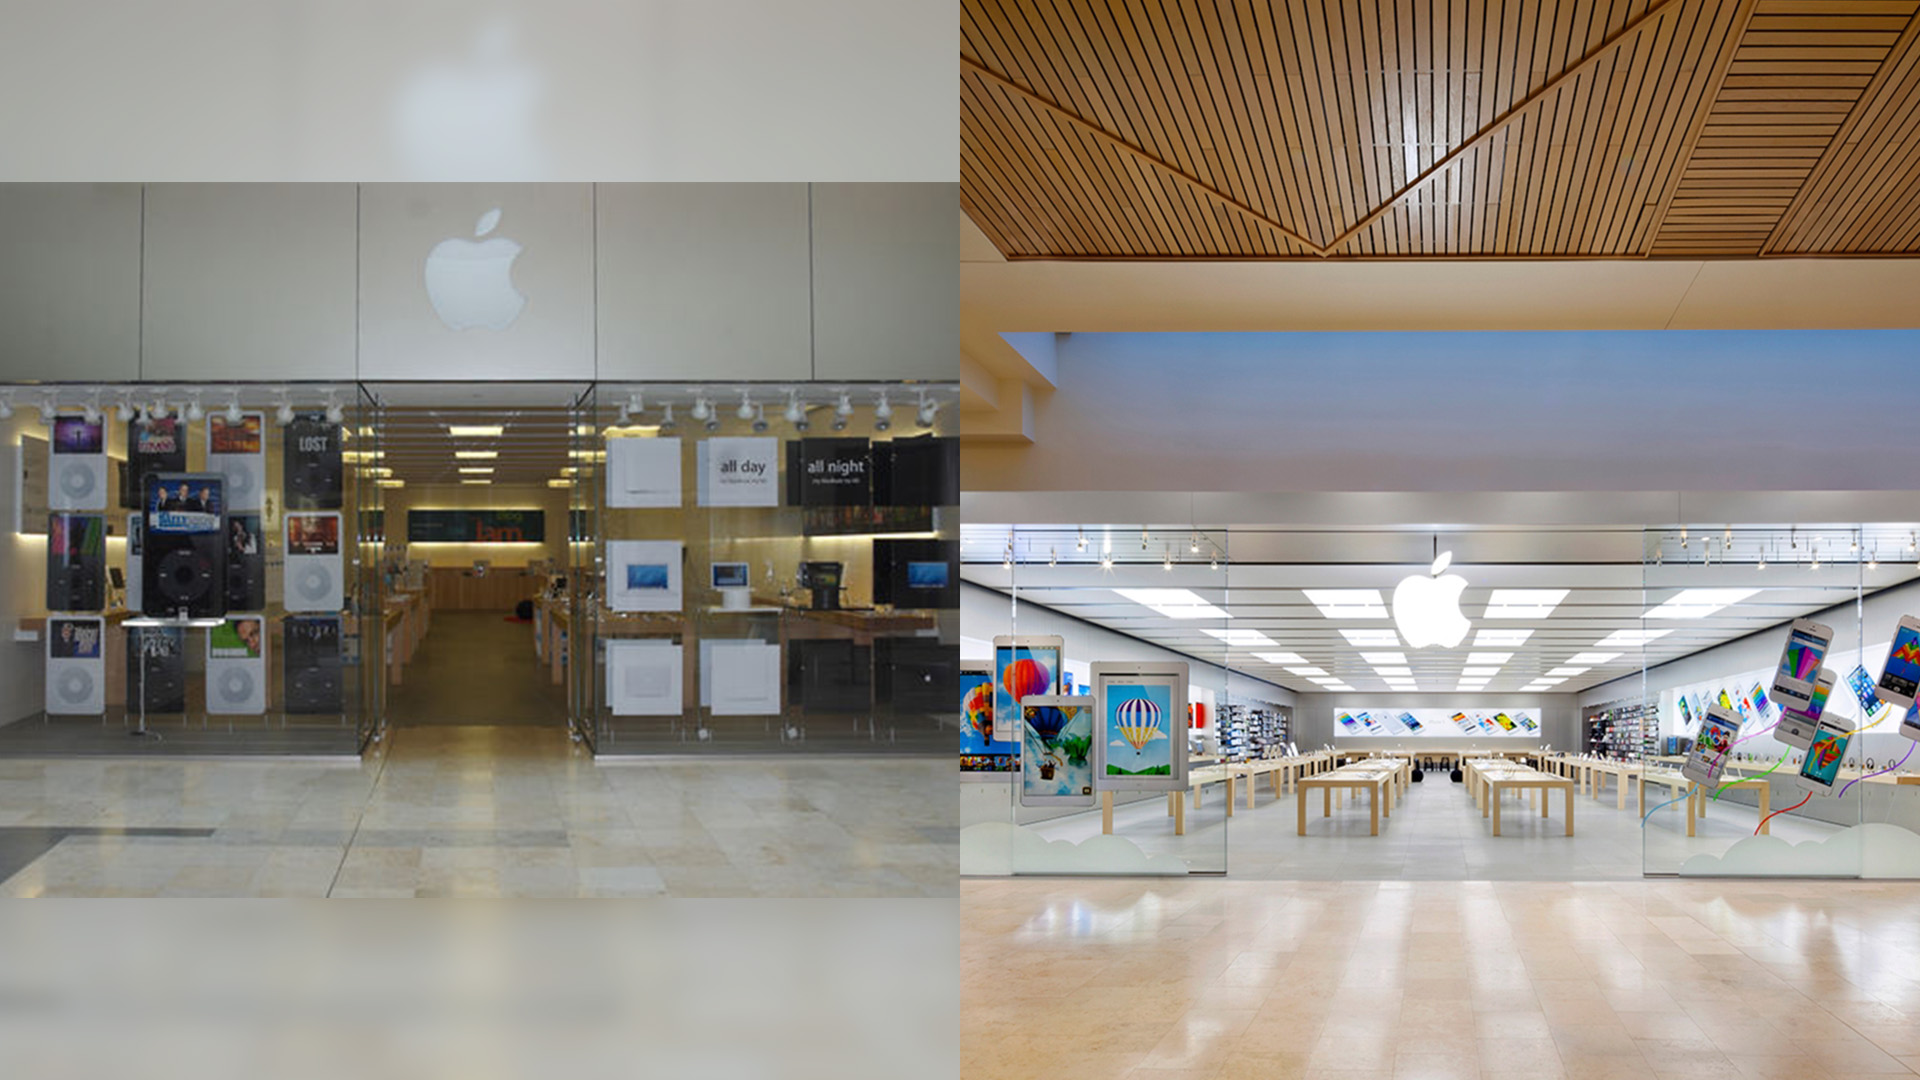 SouthPark - Apple Store - Apple